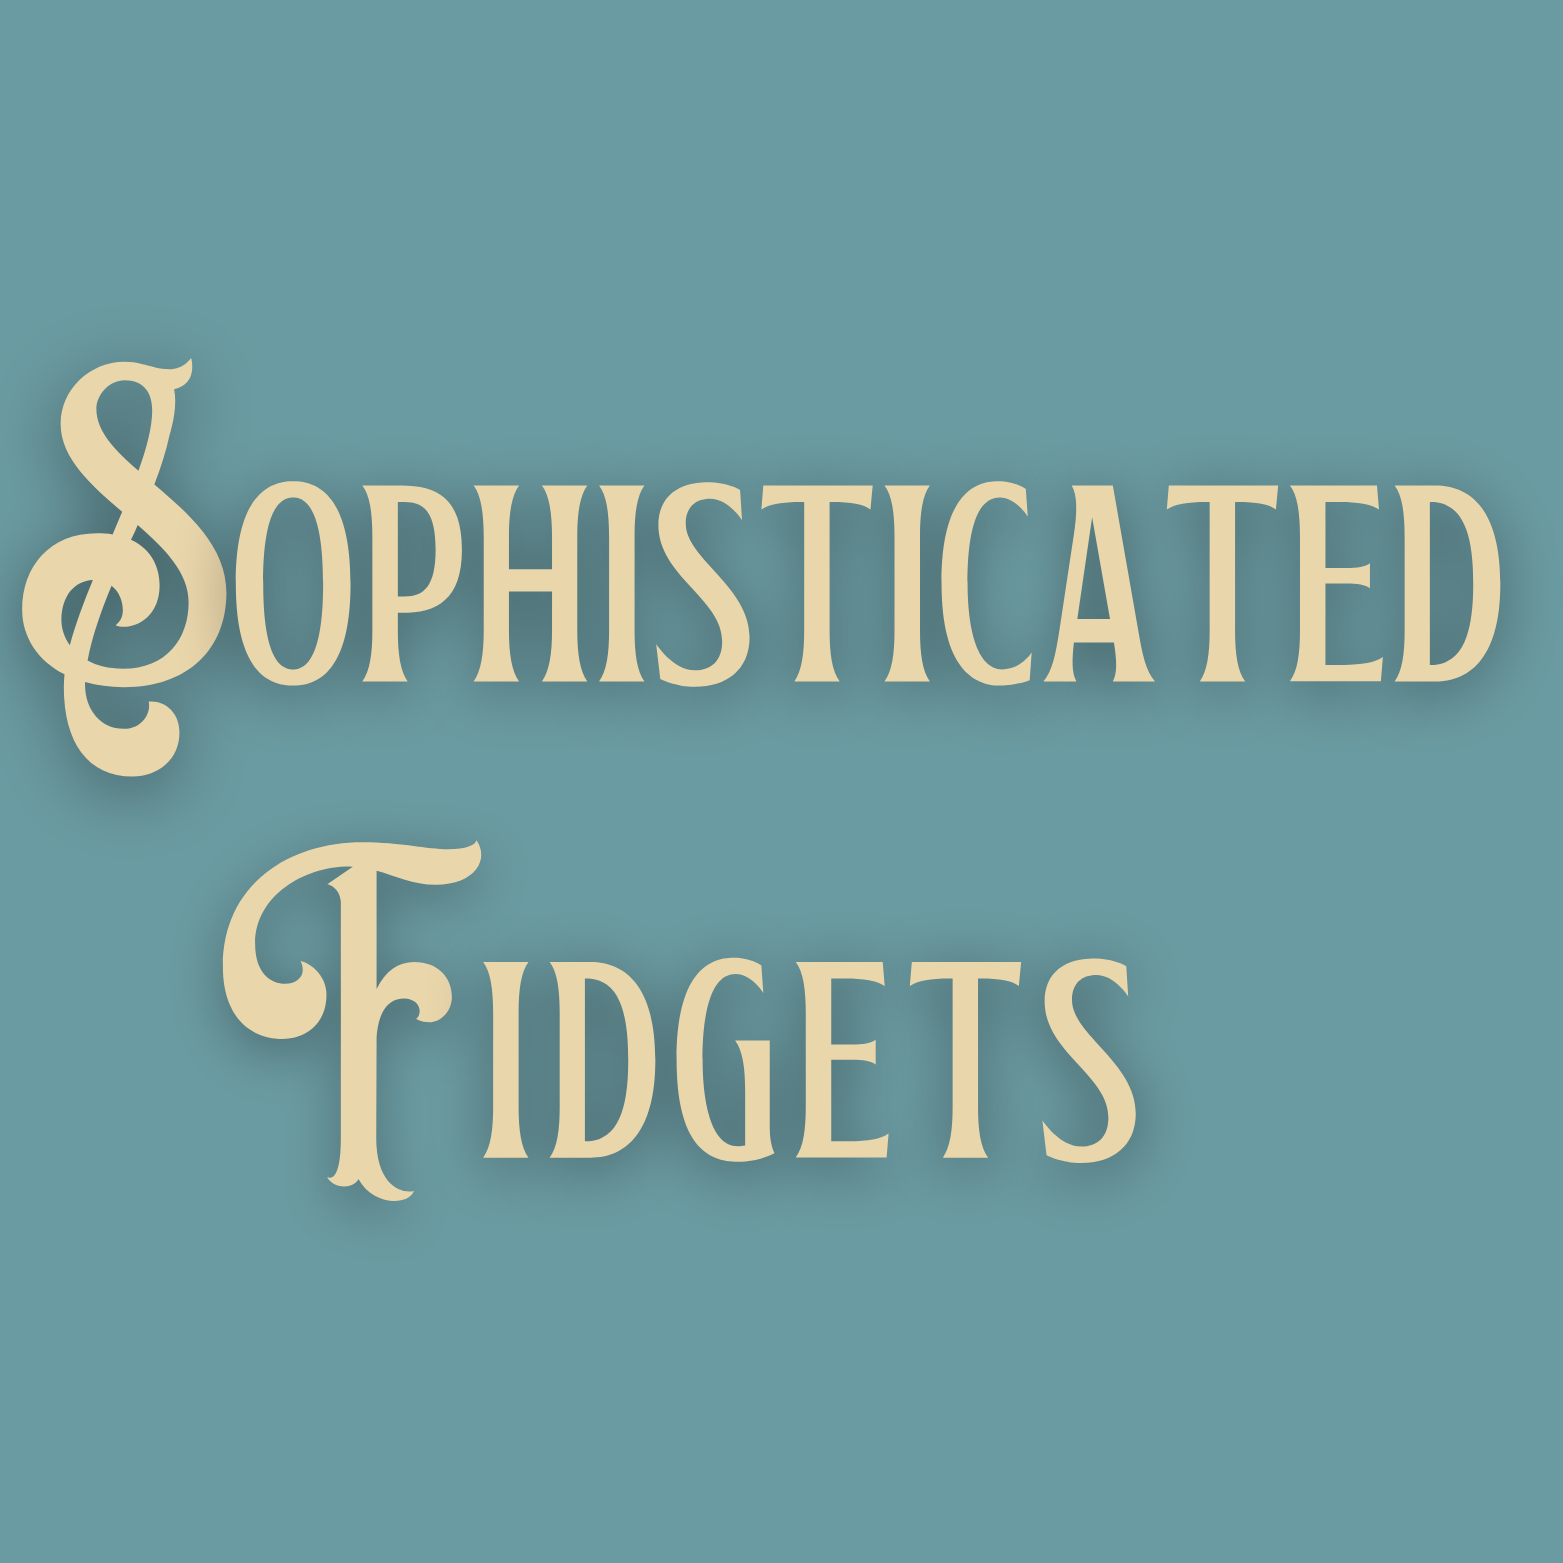 Sophisticated Fidgets